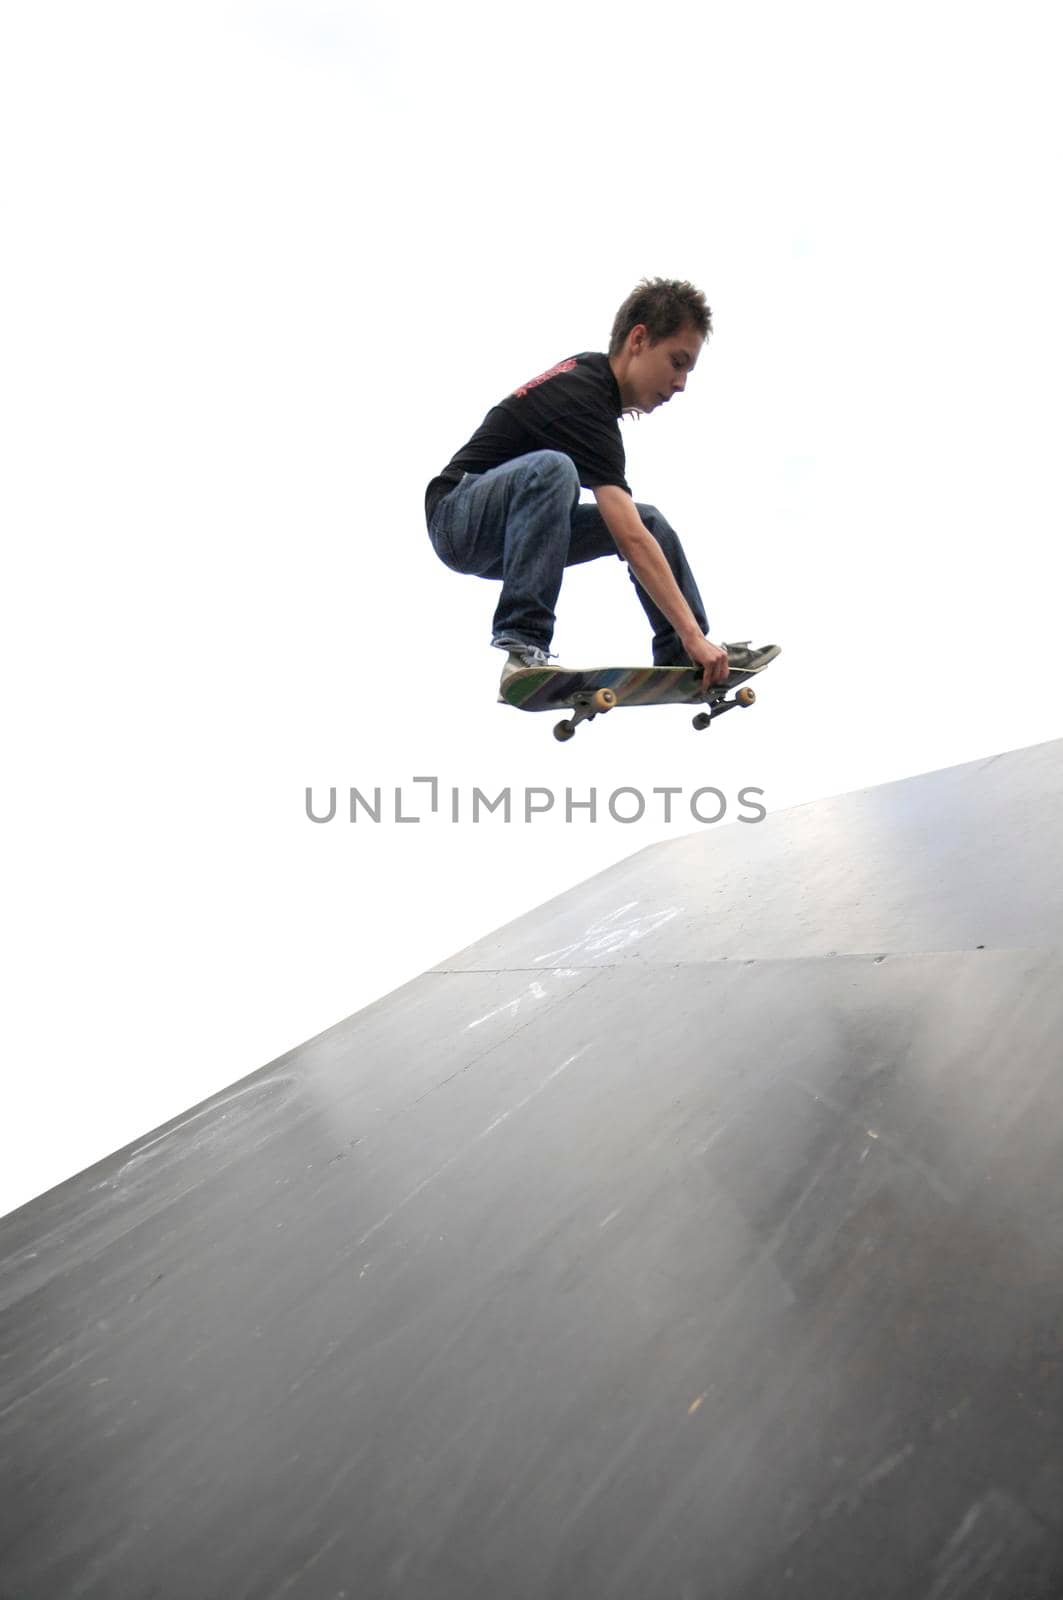 Boy practicing skate in a skate park